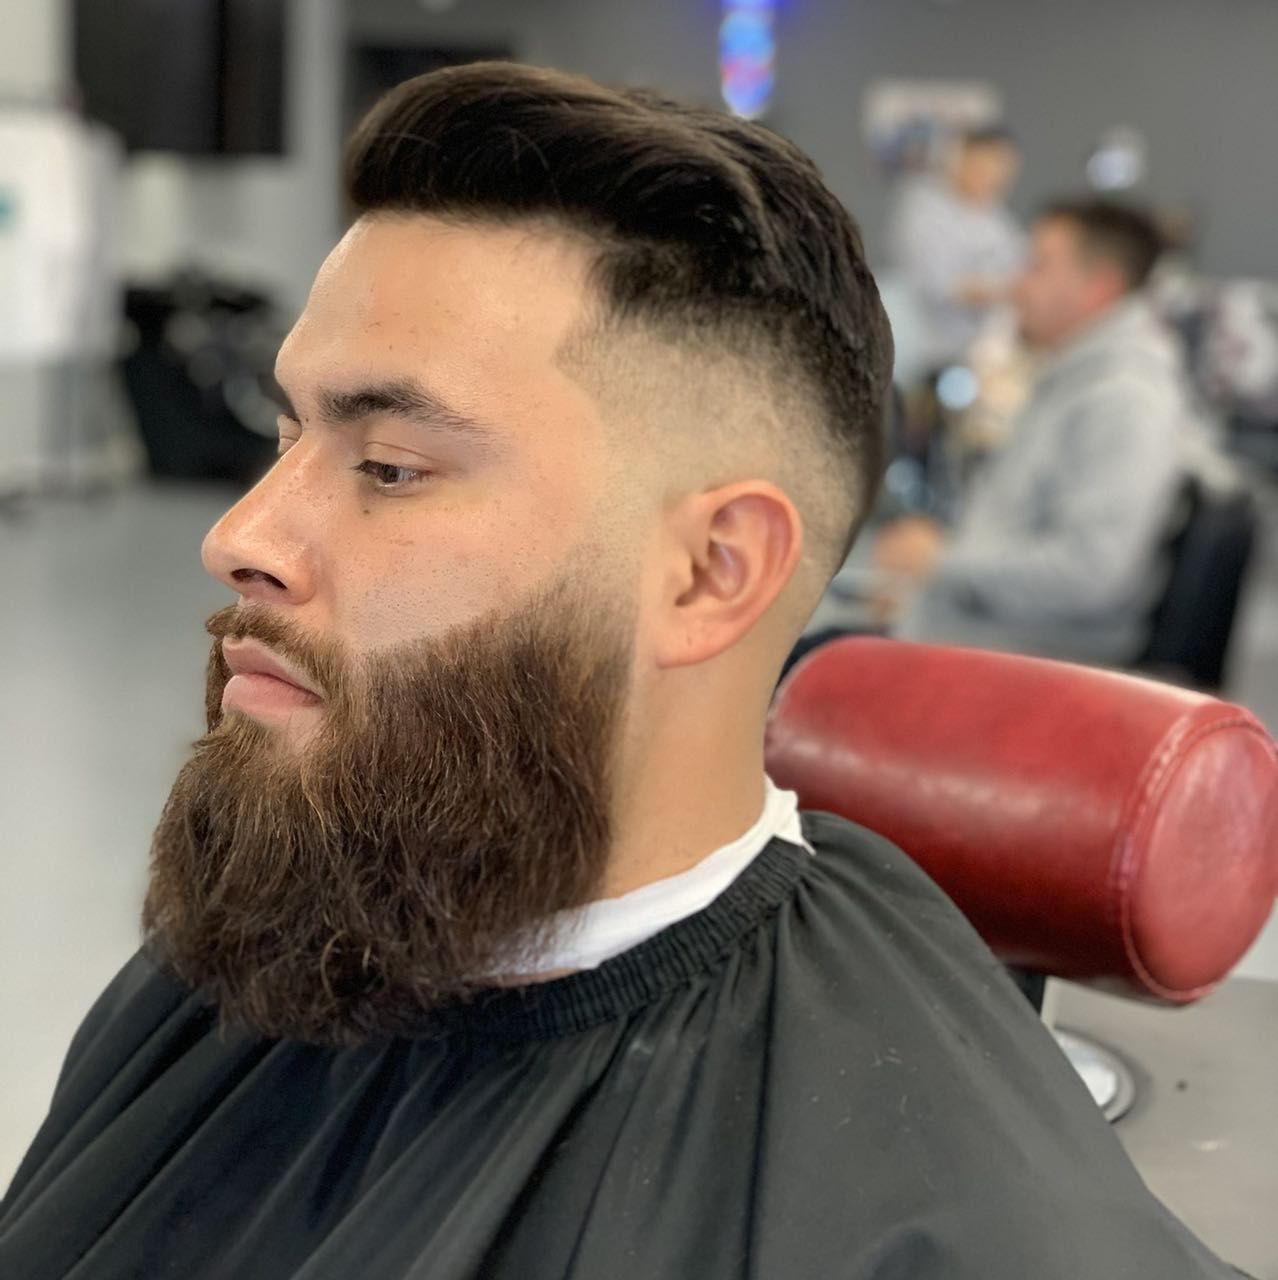 Haircut + Beard portfolio